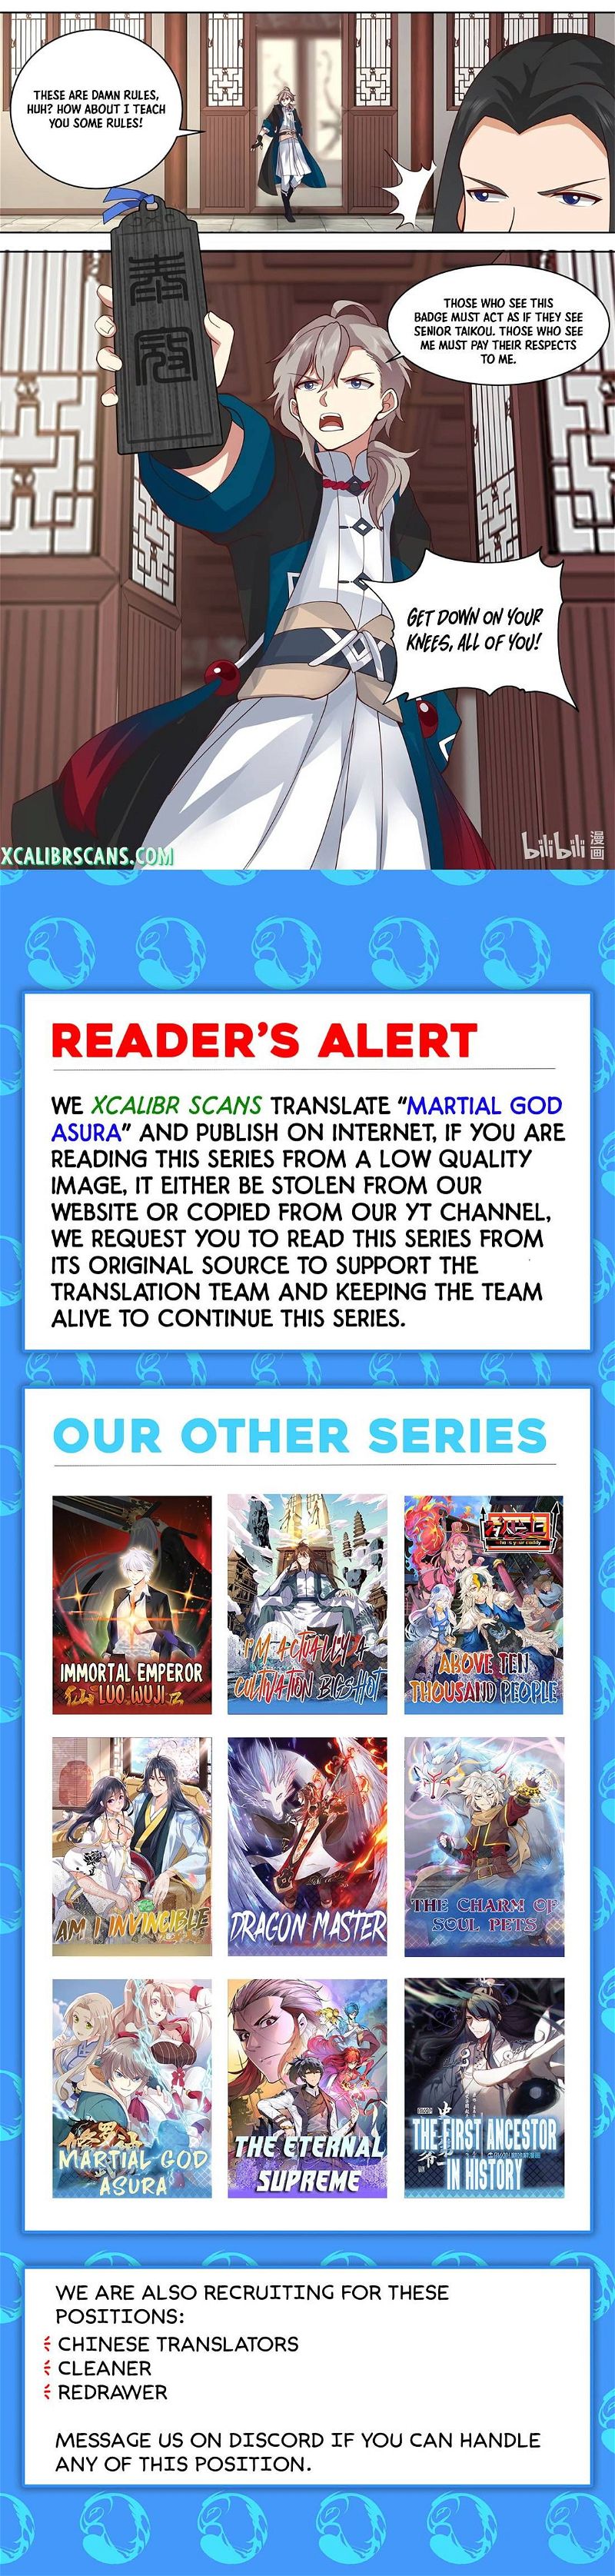 Martial God Asura Chapter 497 page 10